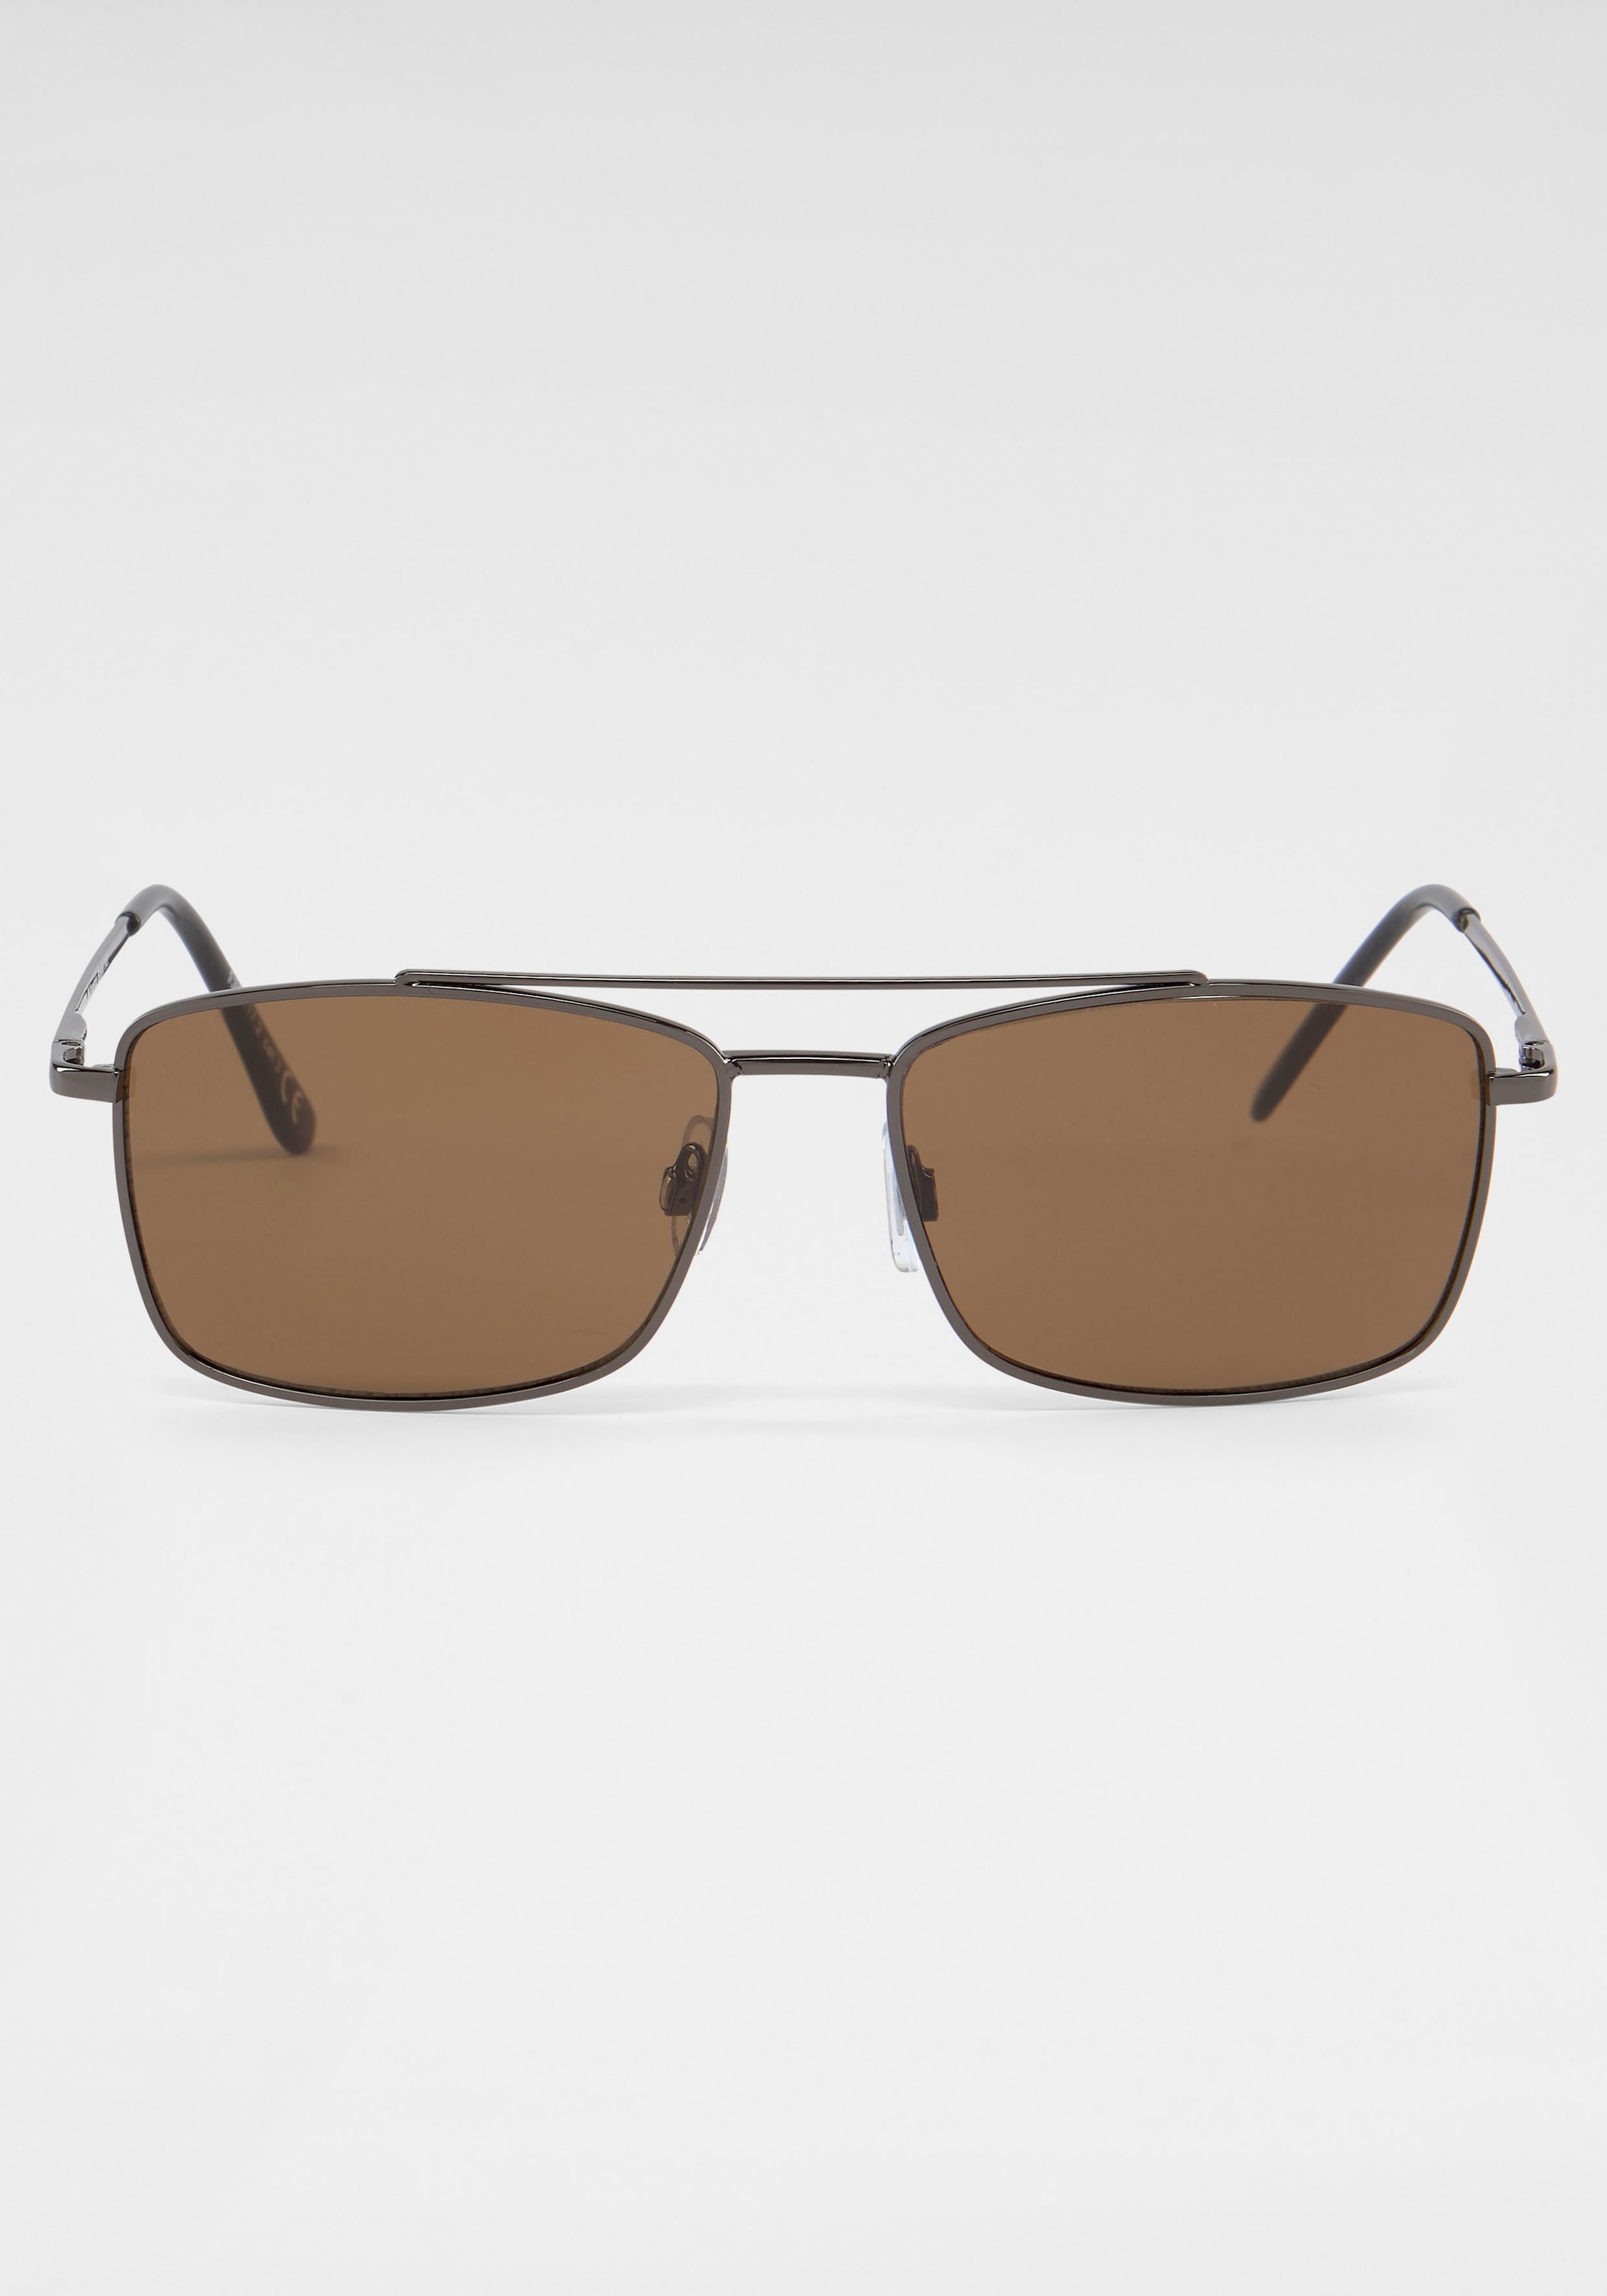 66 Sonnenbrille Eyewear online the ROUTE Freedom Feel kaufen